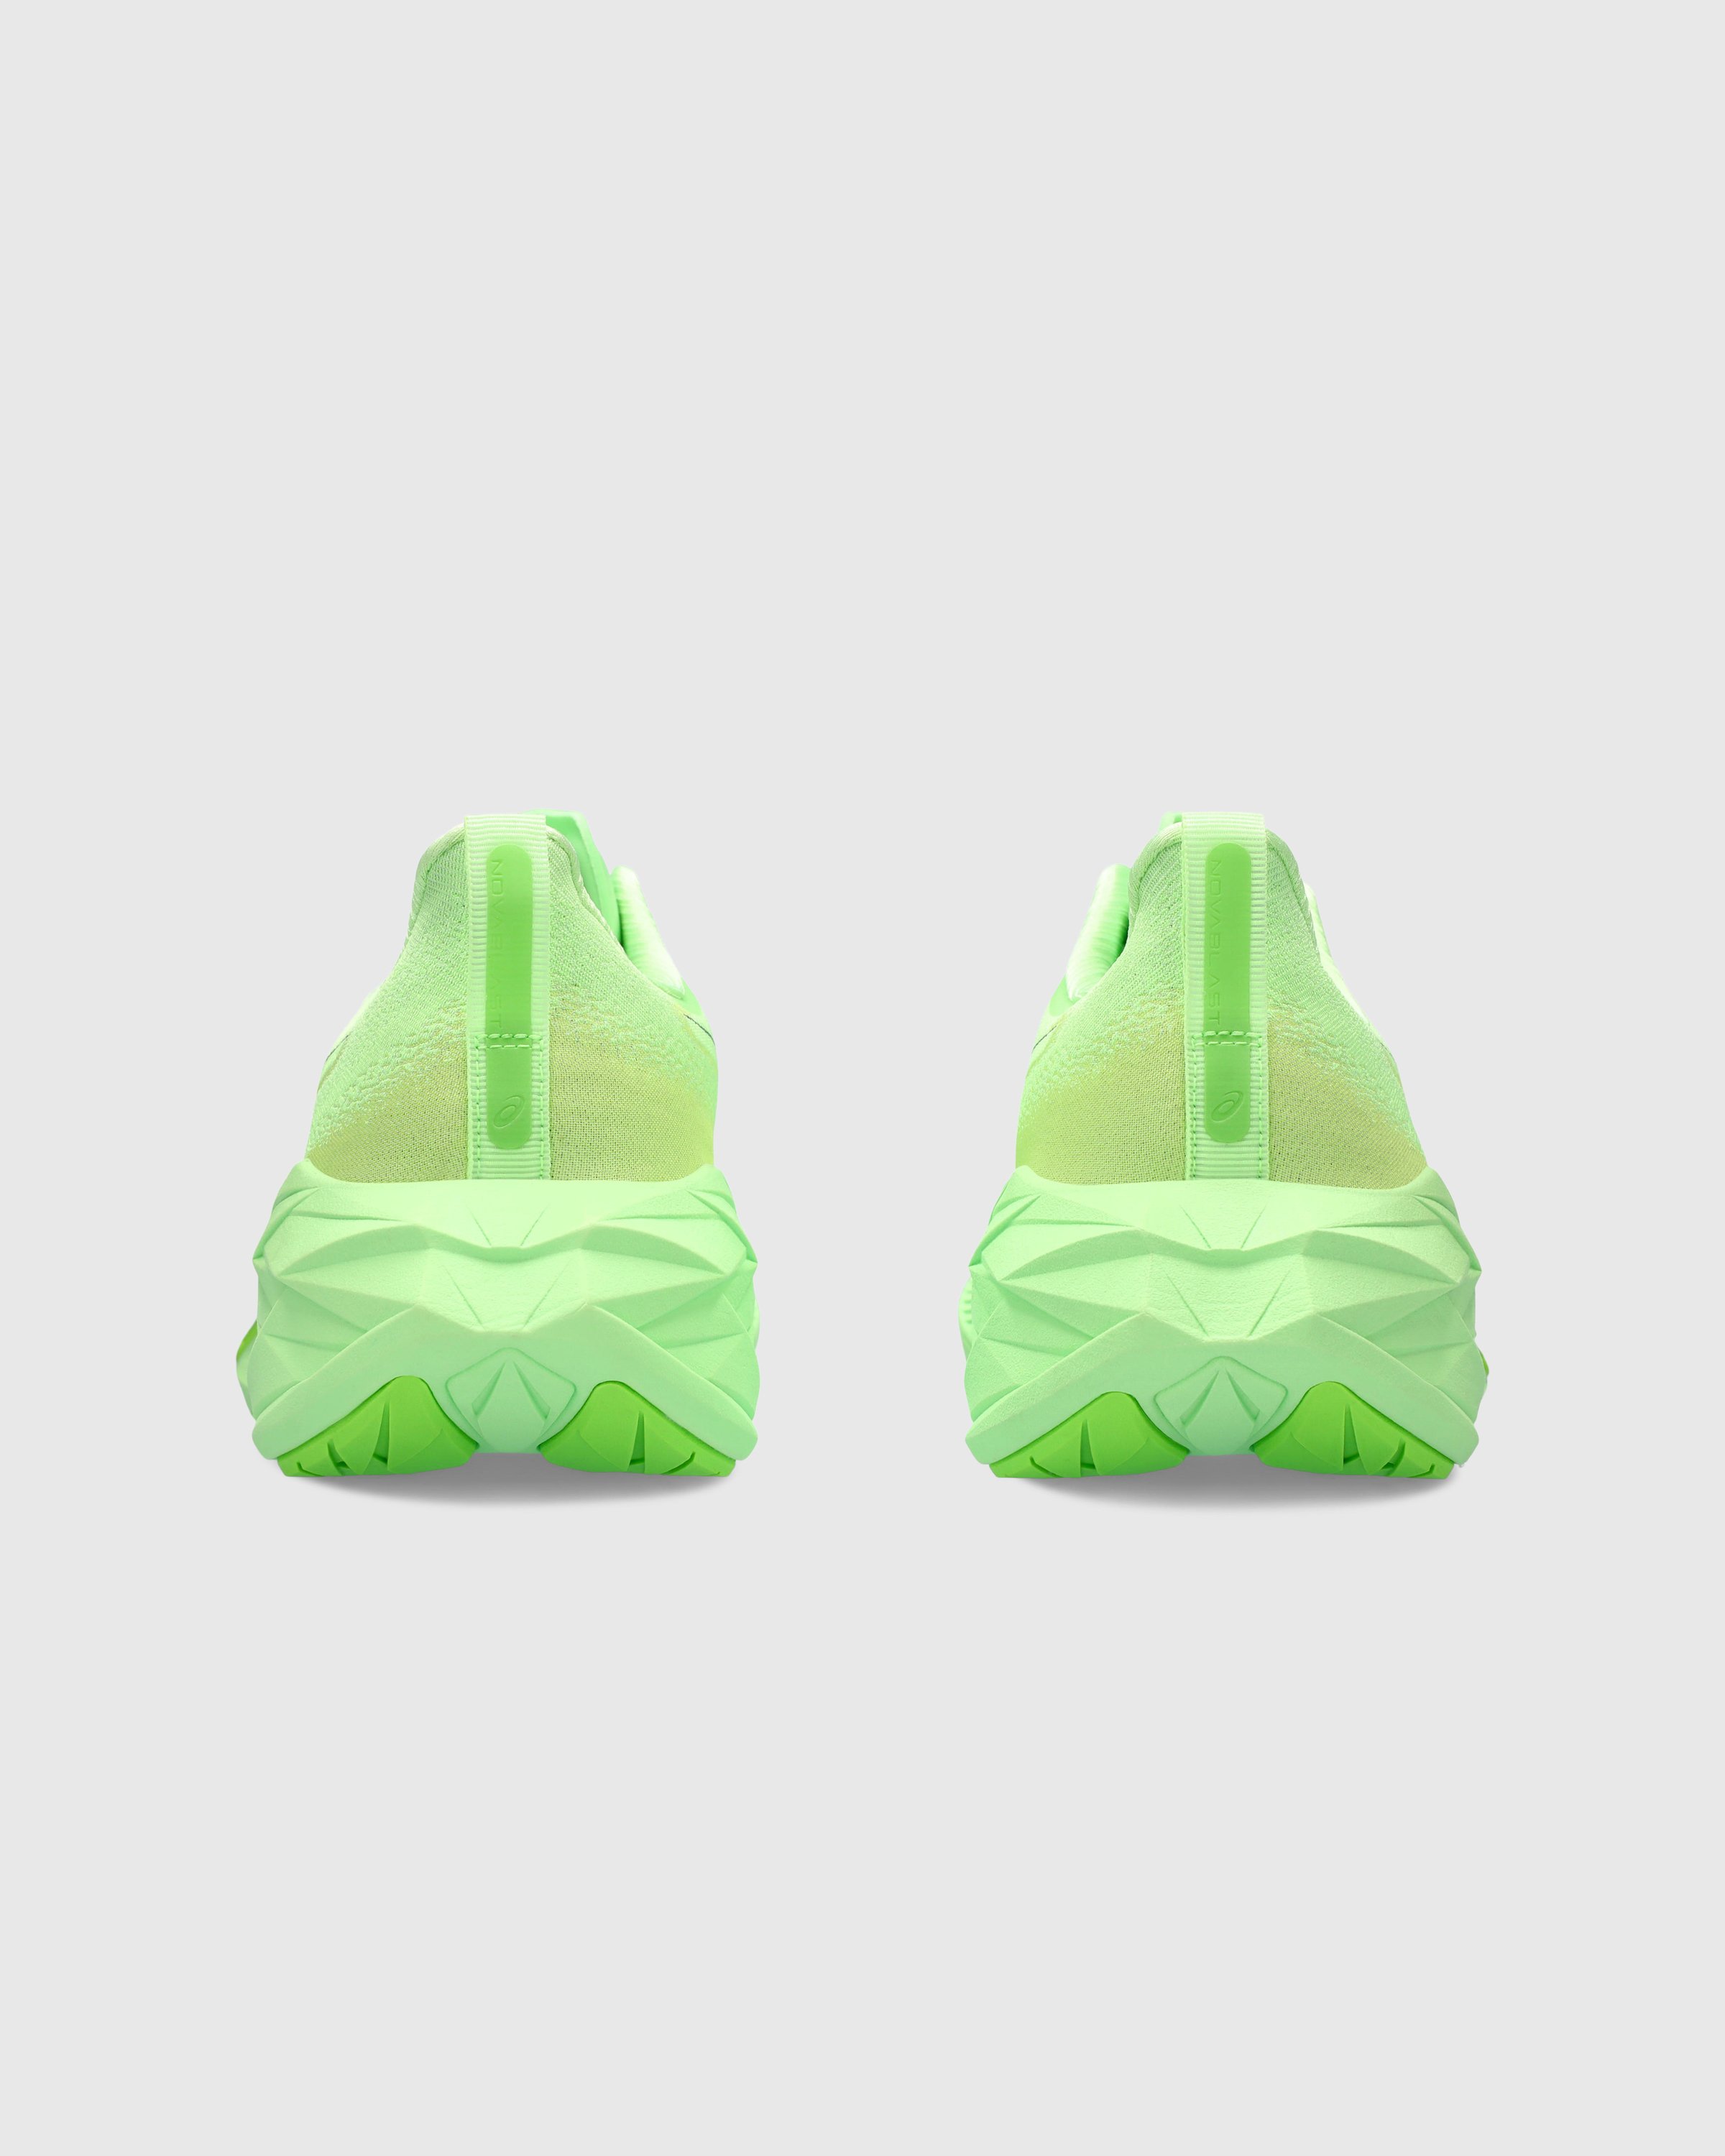 asics - NOVABLAST 4 Illuminate Green/Lime Burst - Footwear - Green - Image 5